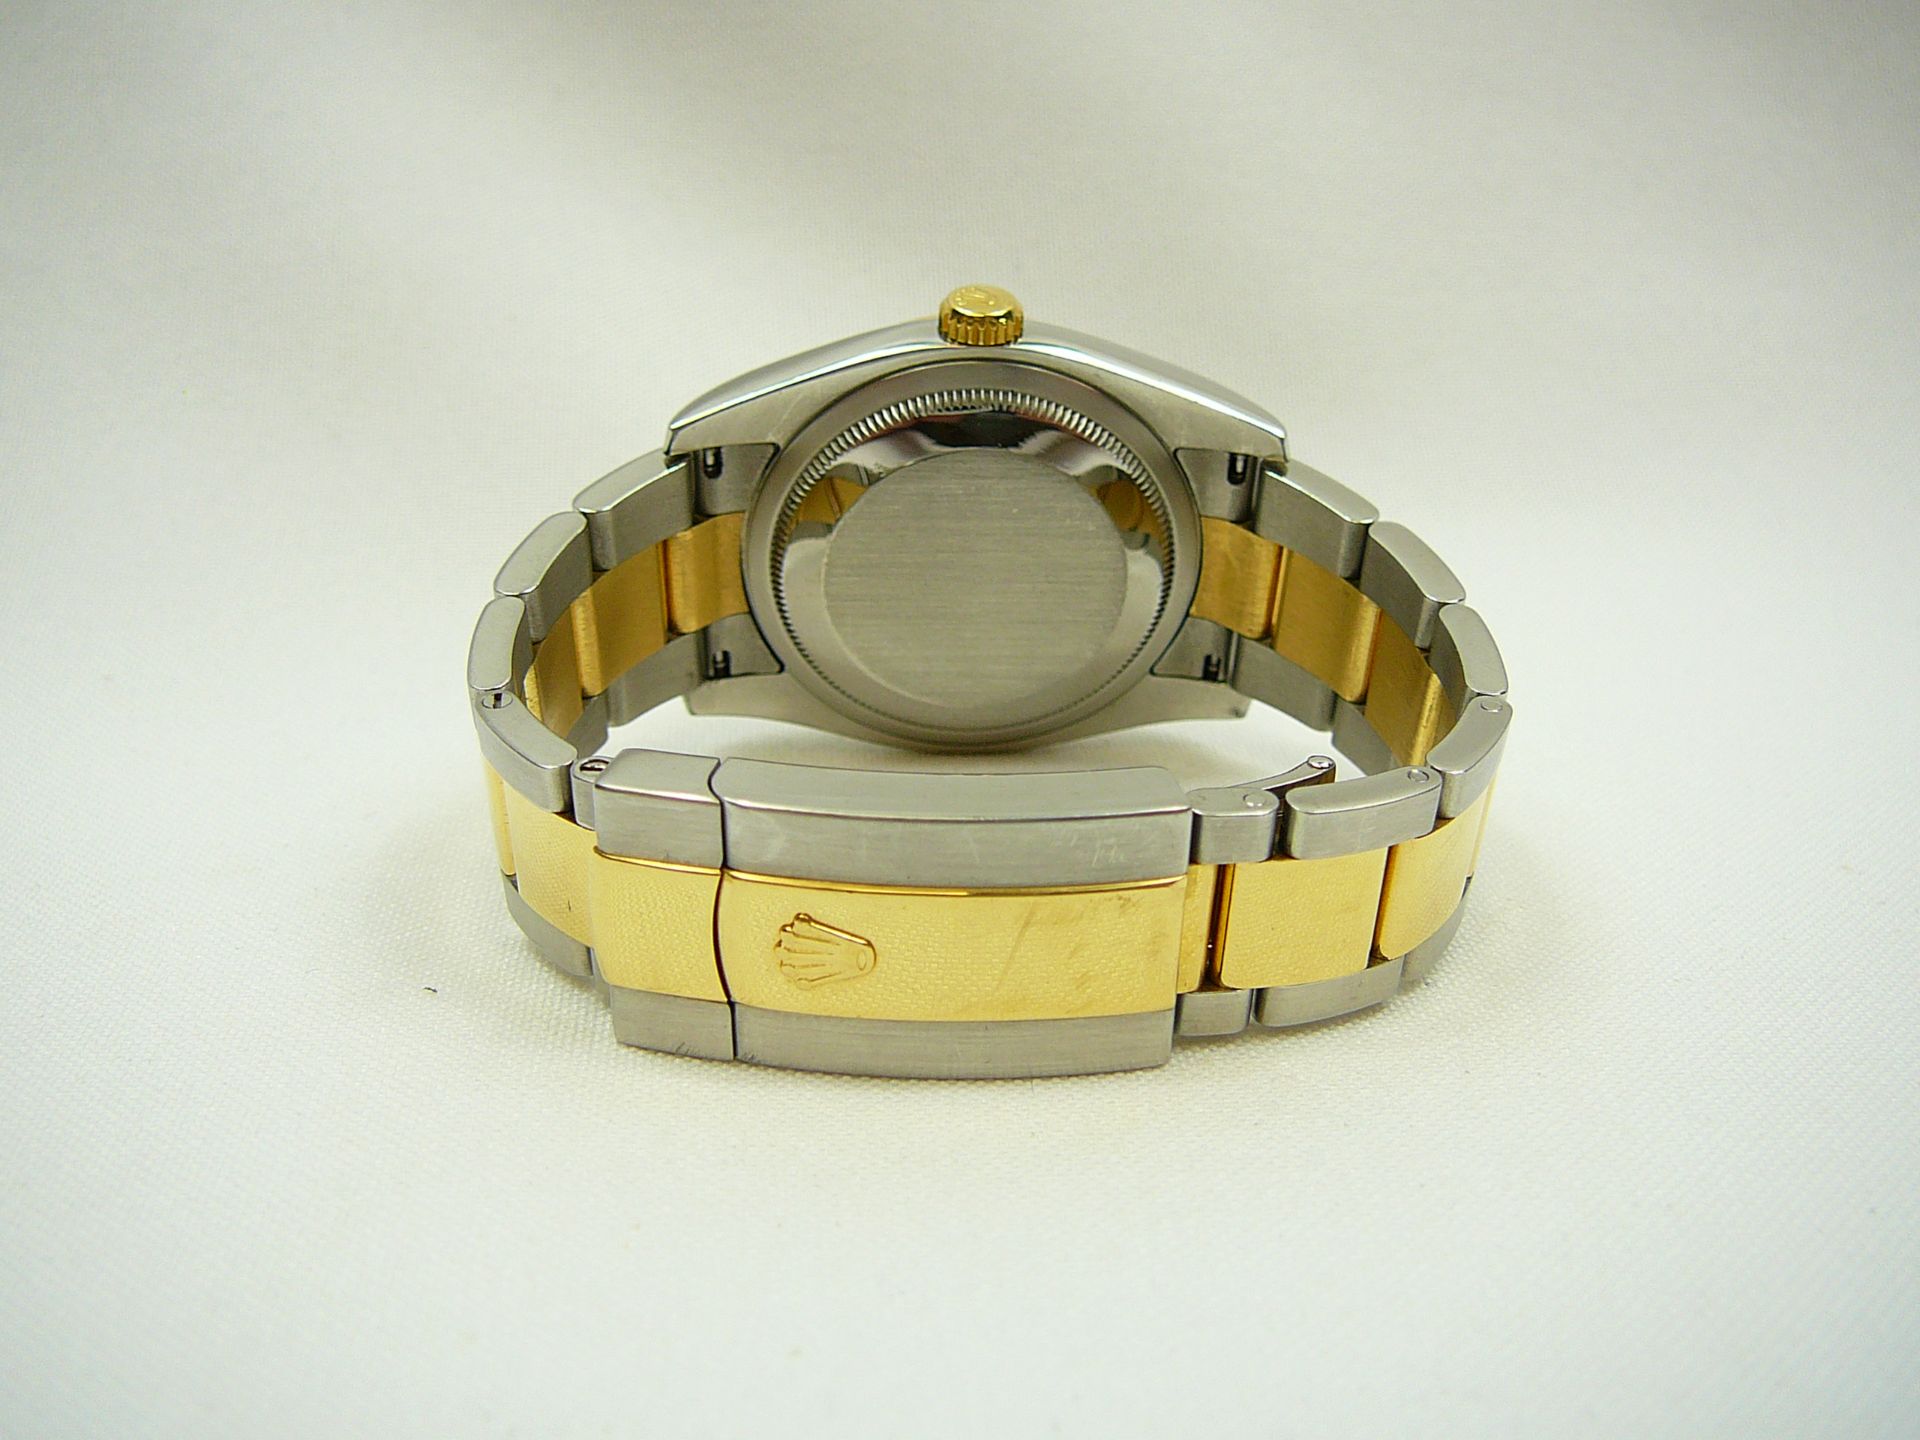 Gents Rolex Wristwatch - Image 8 of 9